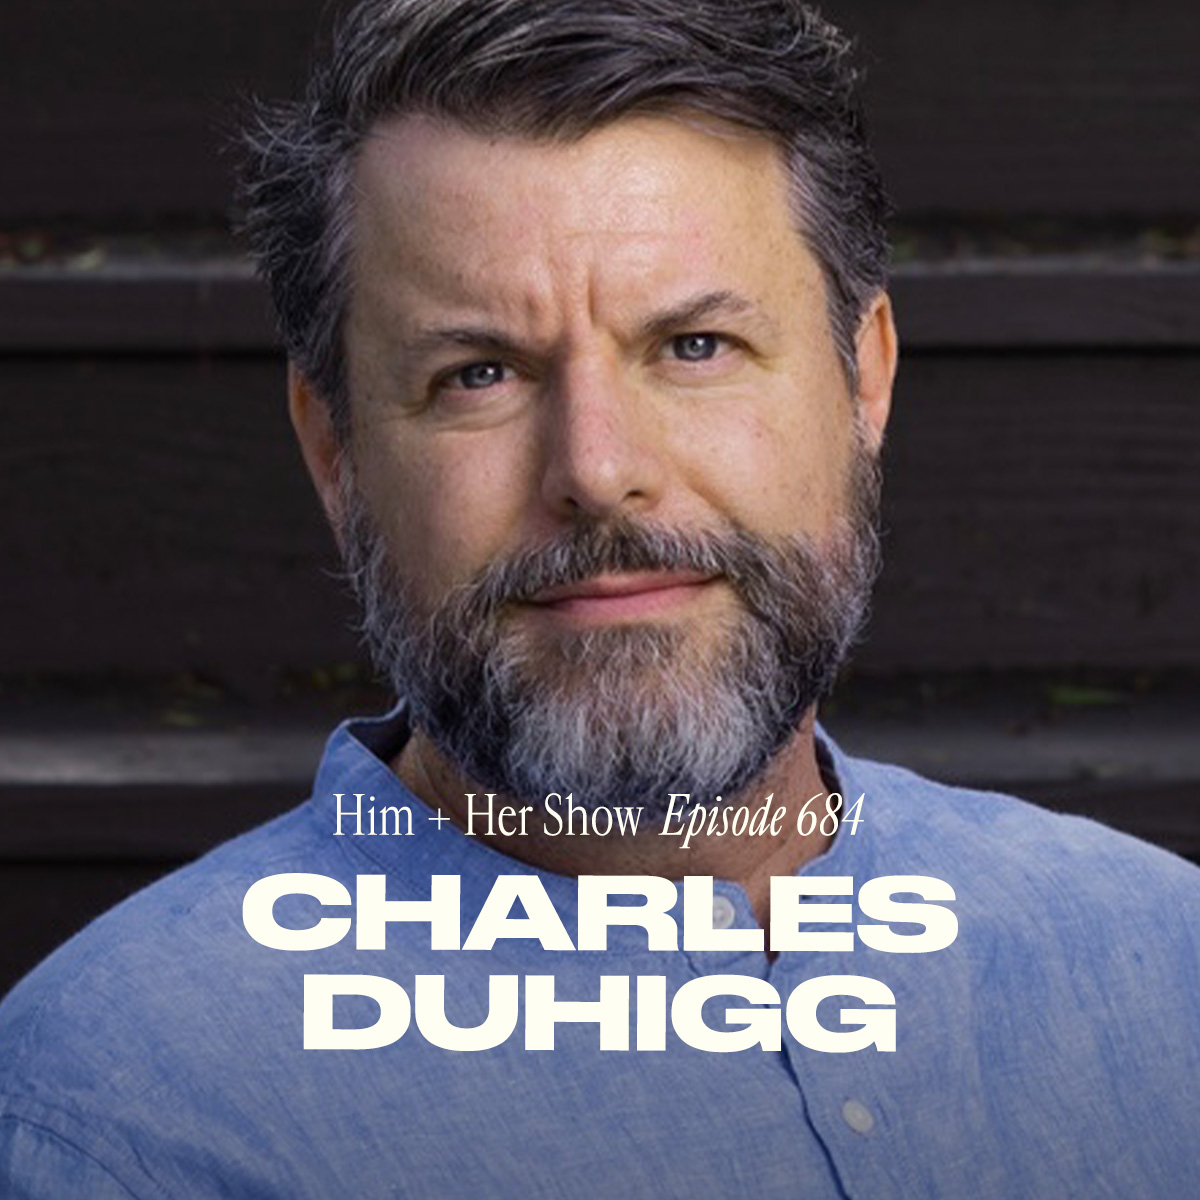 Charles Duhigg